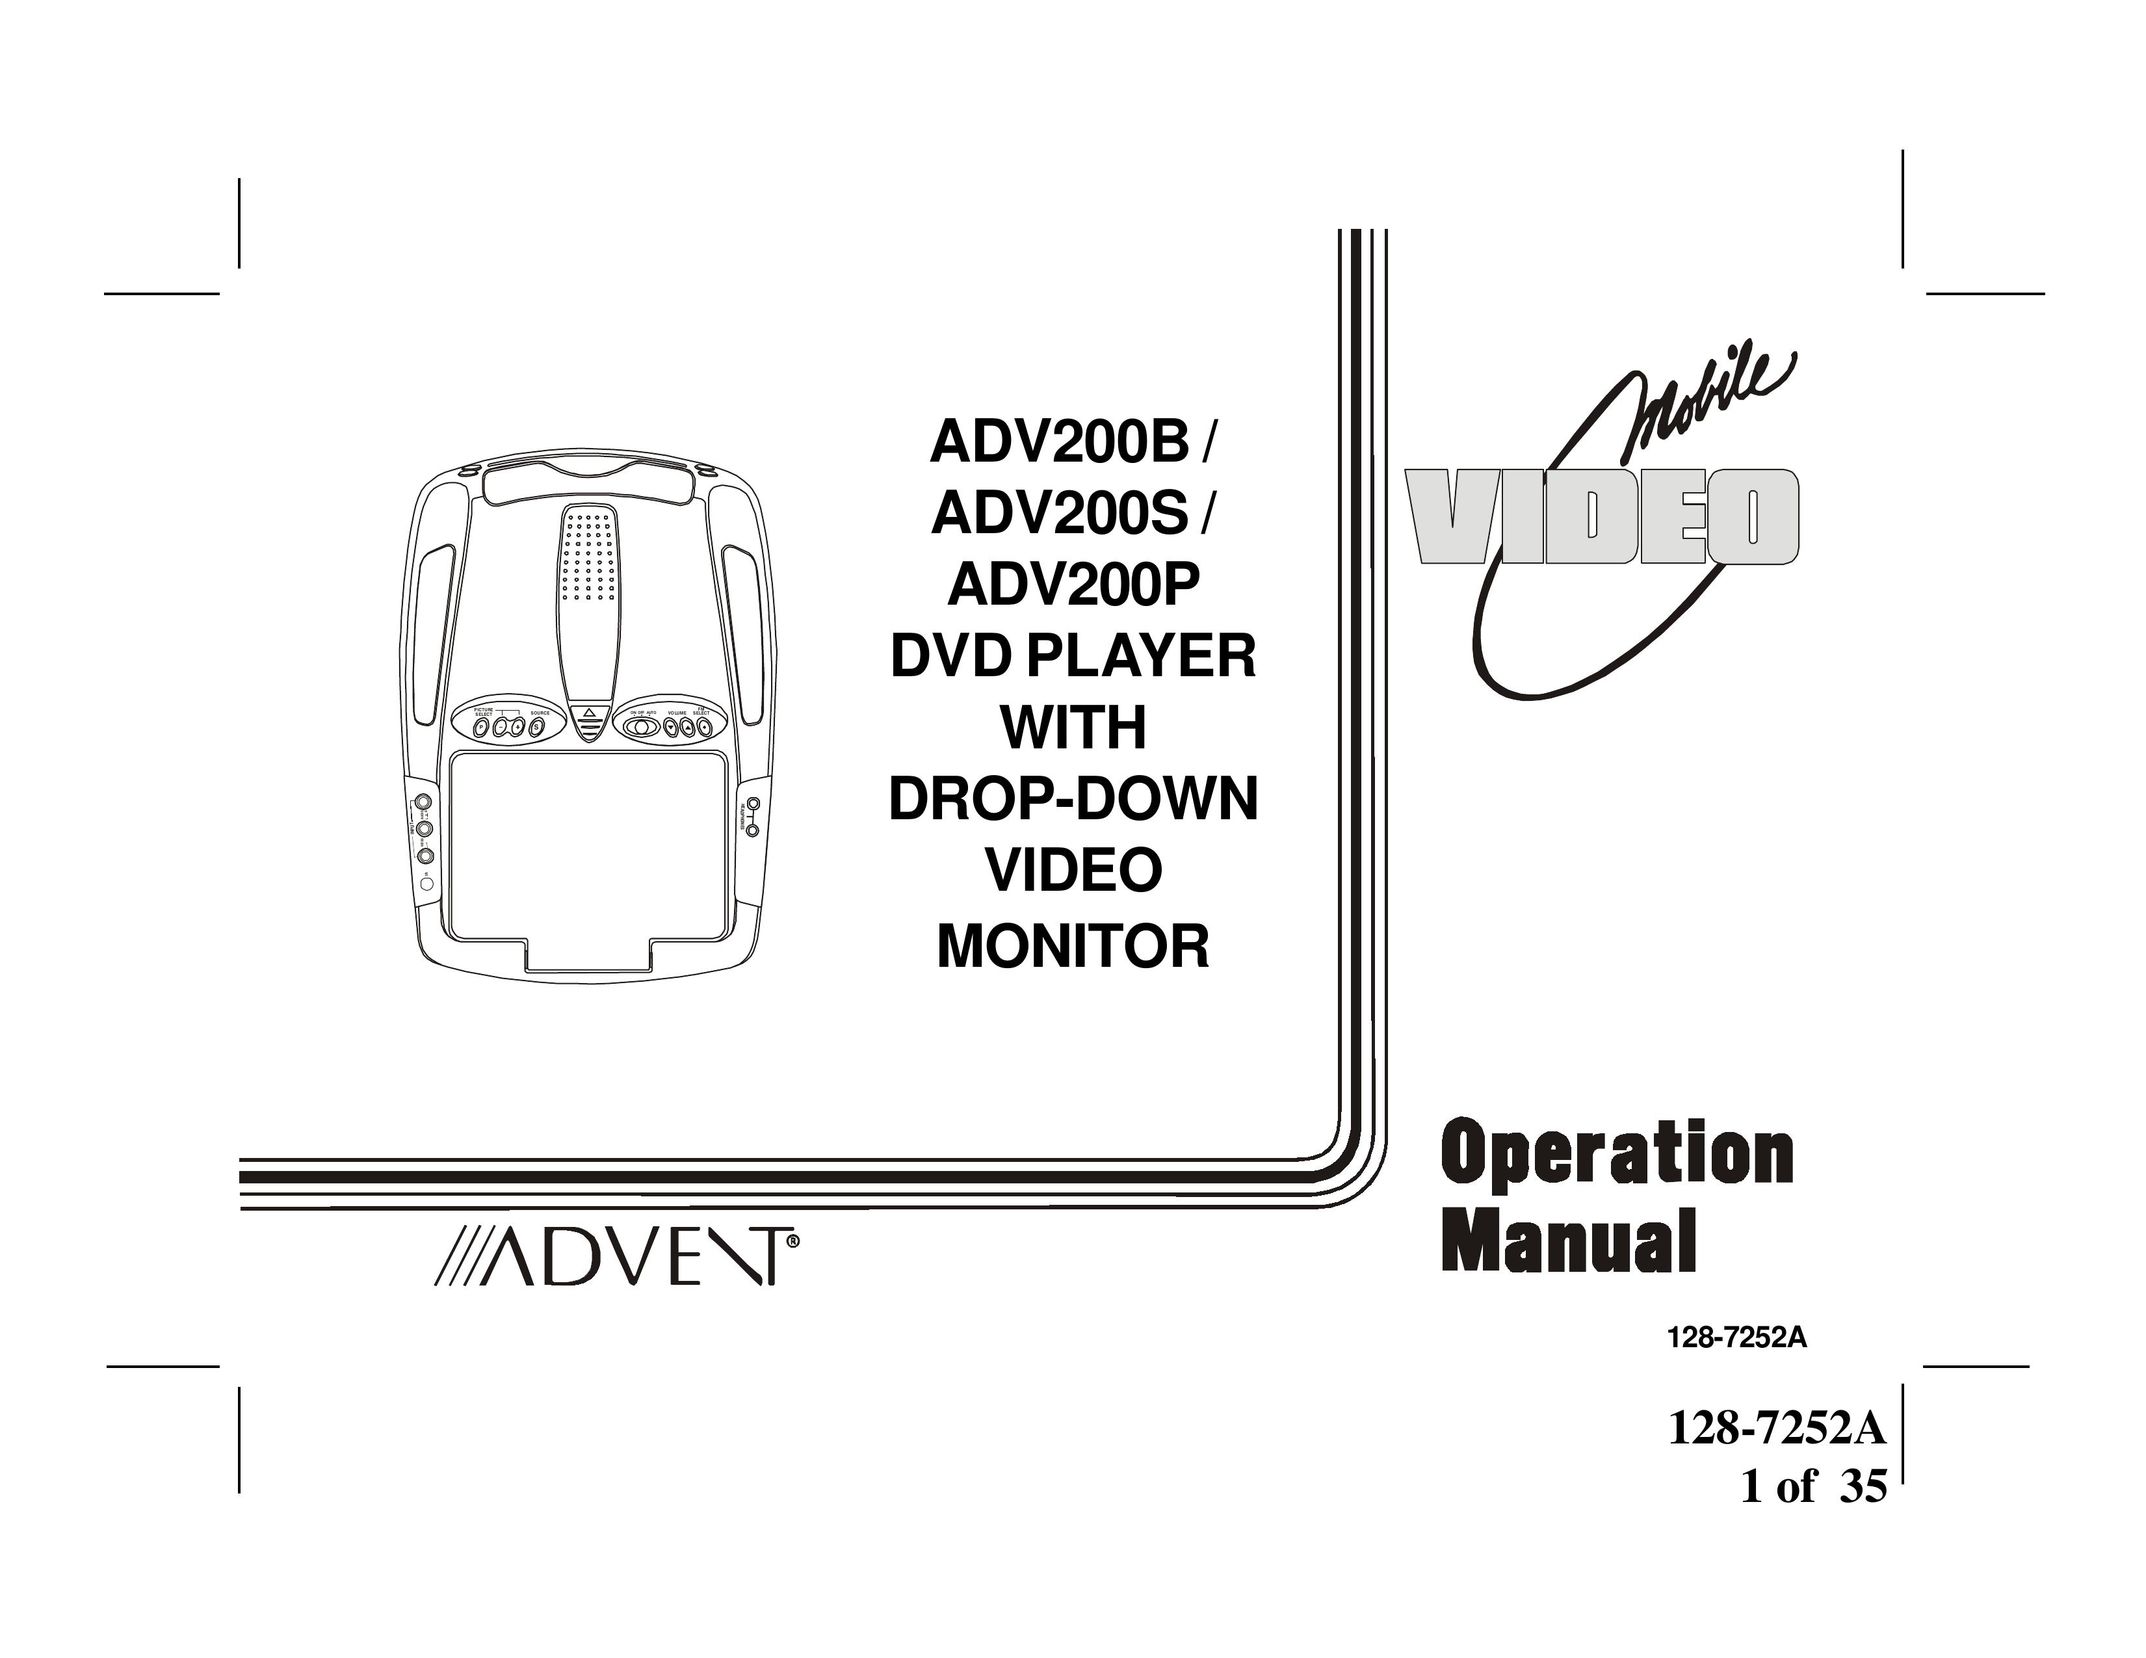 Audiovox ADV200B DVD Player User Manual